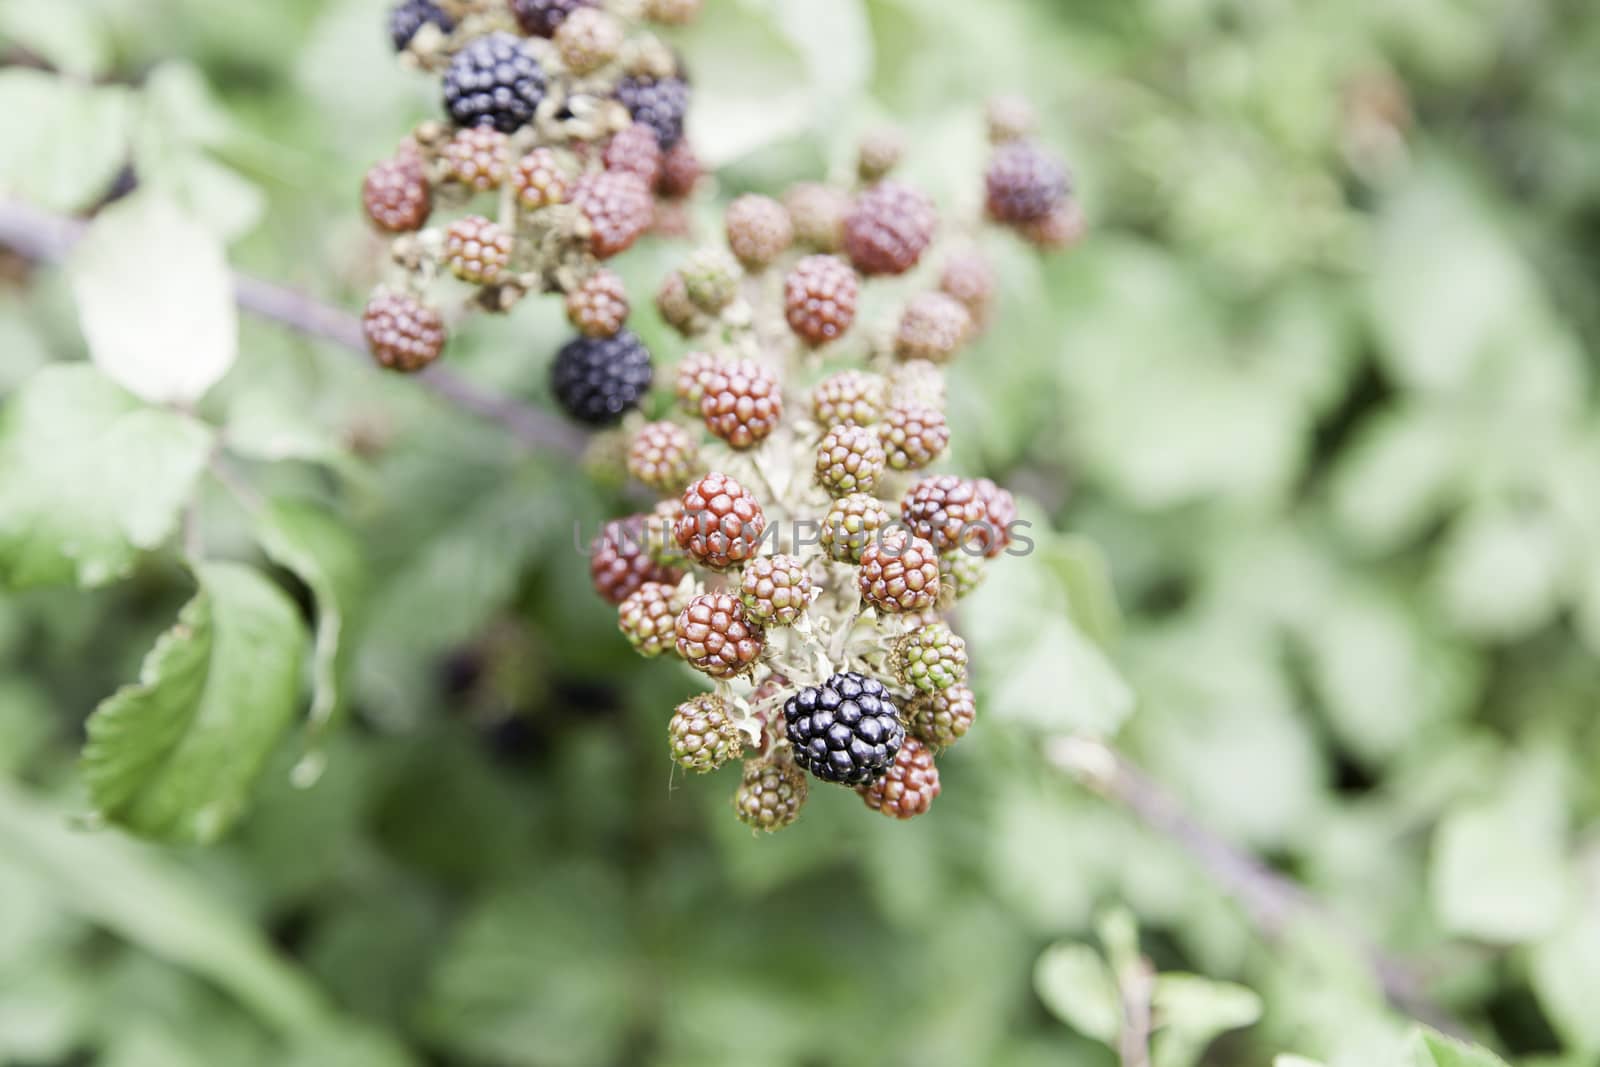 Wild blackberries in nature by esebene